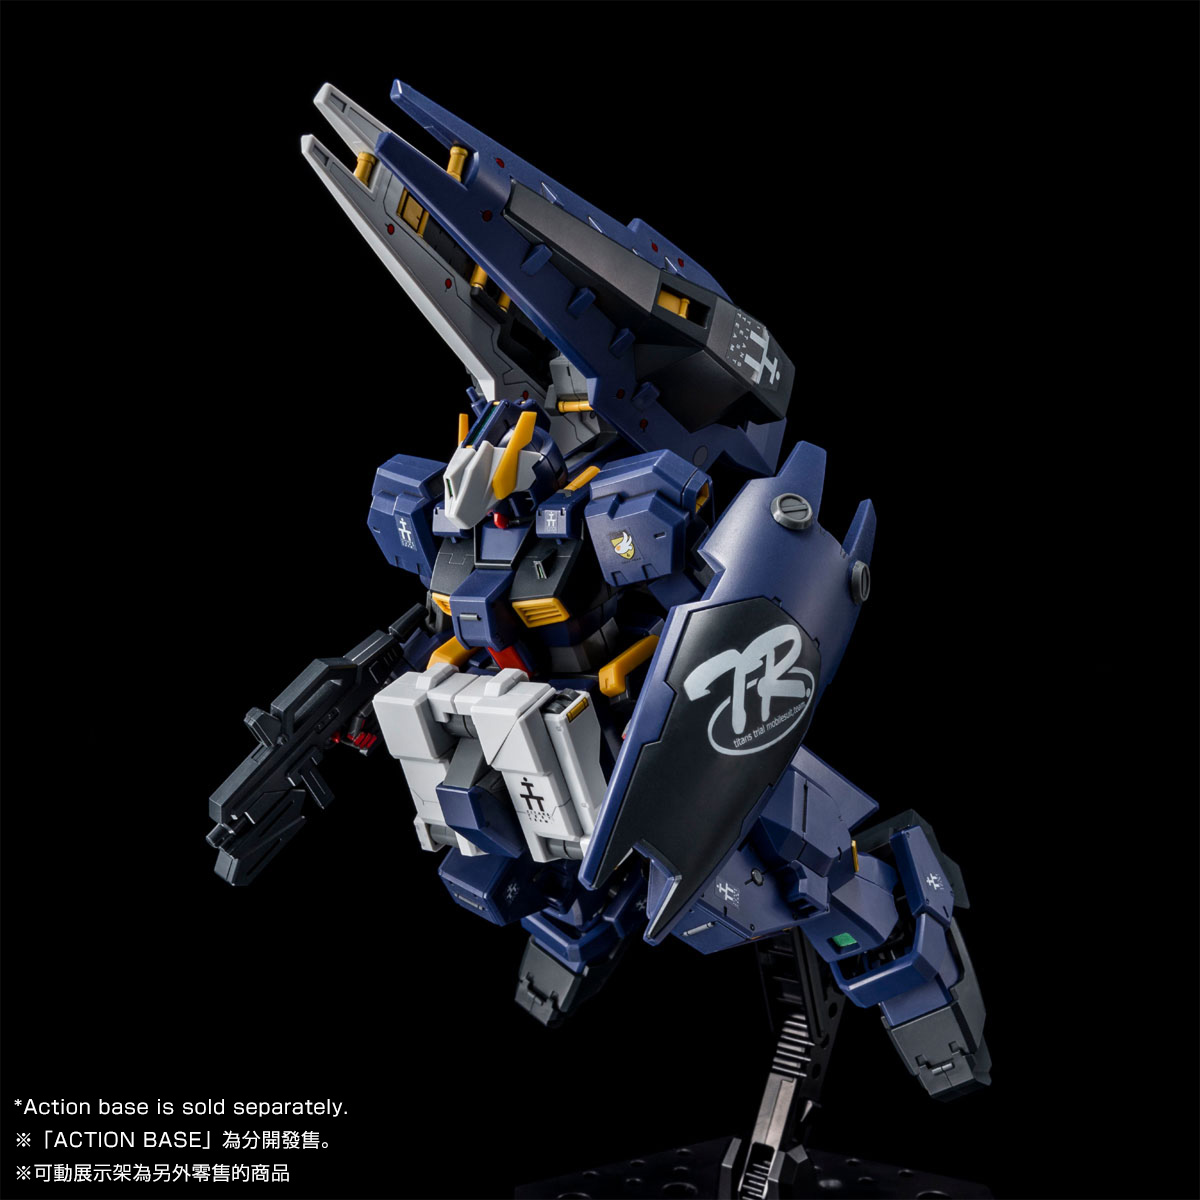 Bandai HGUC 1/144 Gundam Tr-1 Advanced Hazel & Expantion Parts Model Kit for sale online